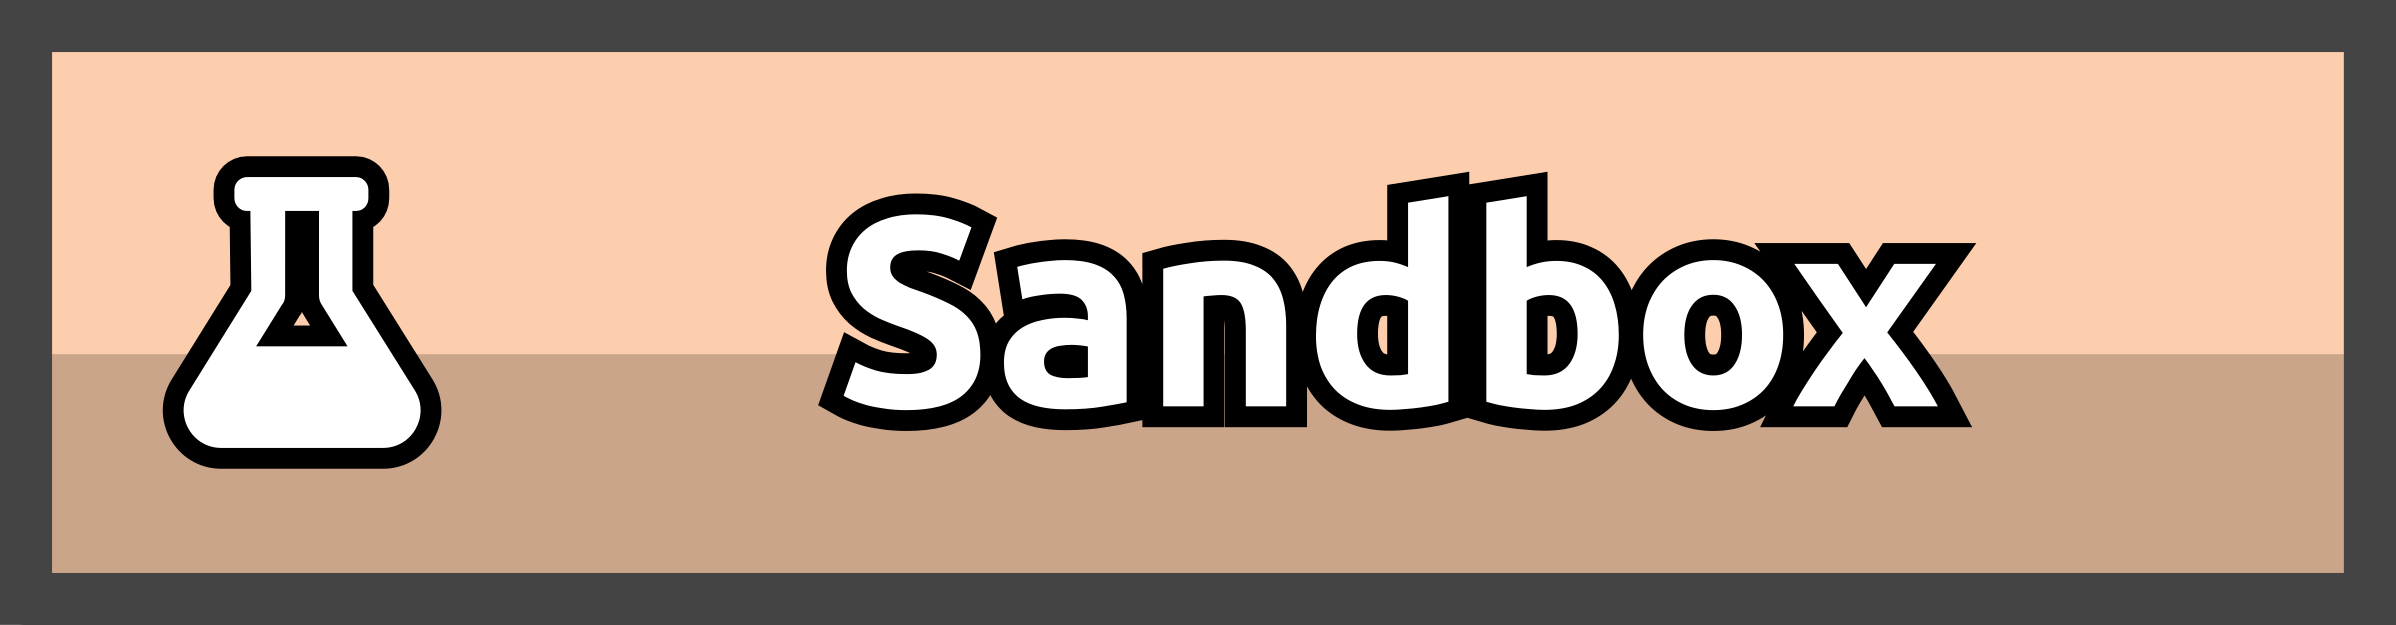 Diep.io Sandbox 2020 - Diep.io Tanks, Mods, Hacks